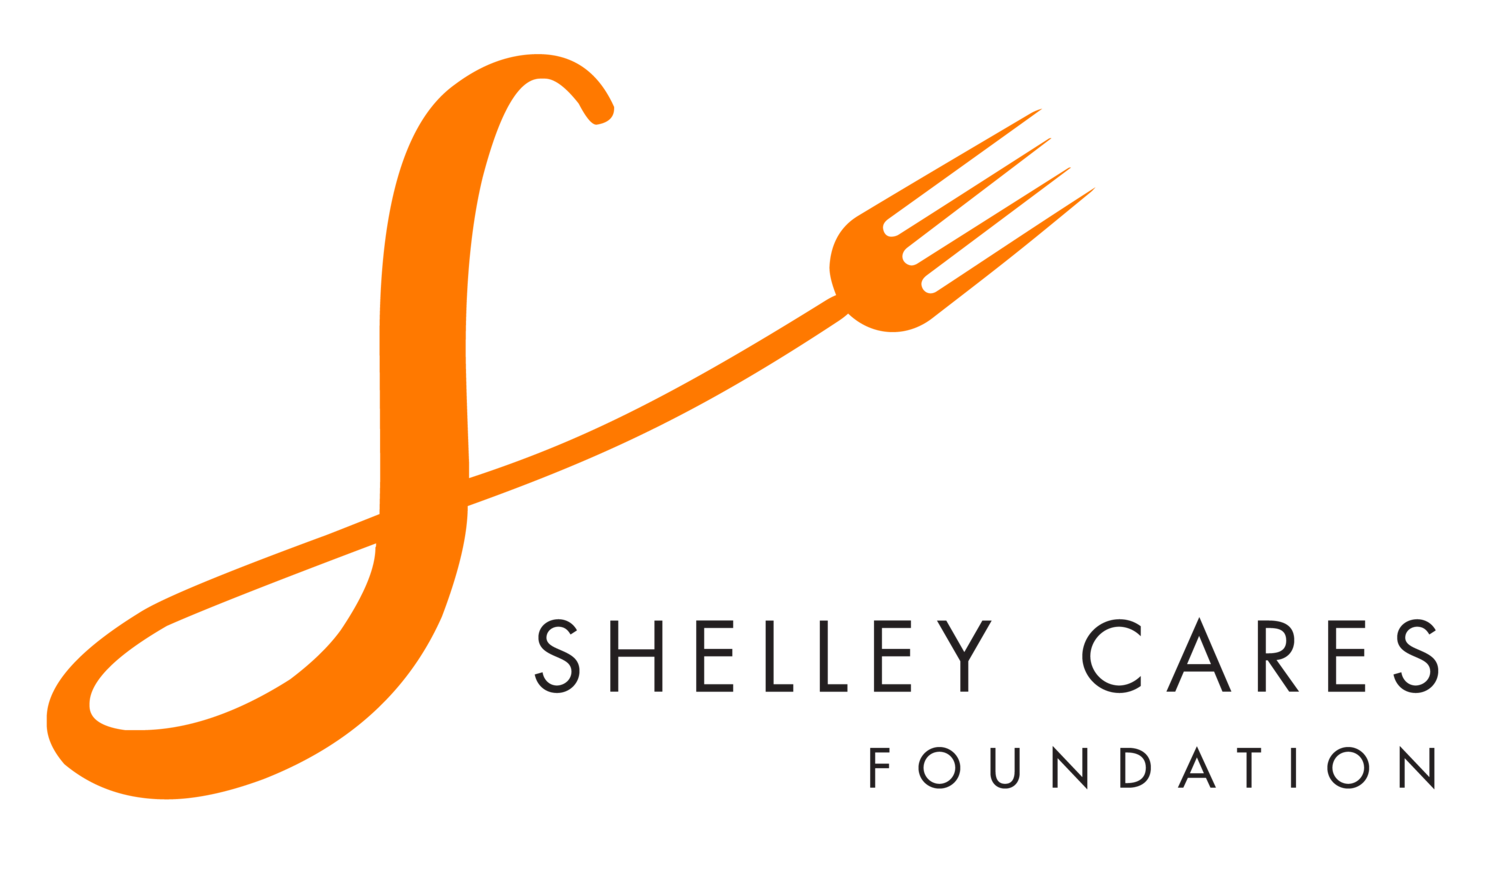 Shelley Cares Foundation